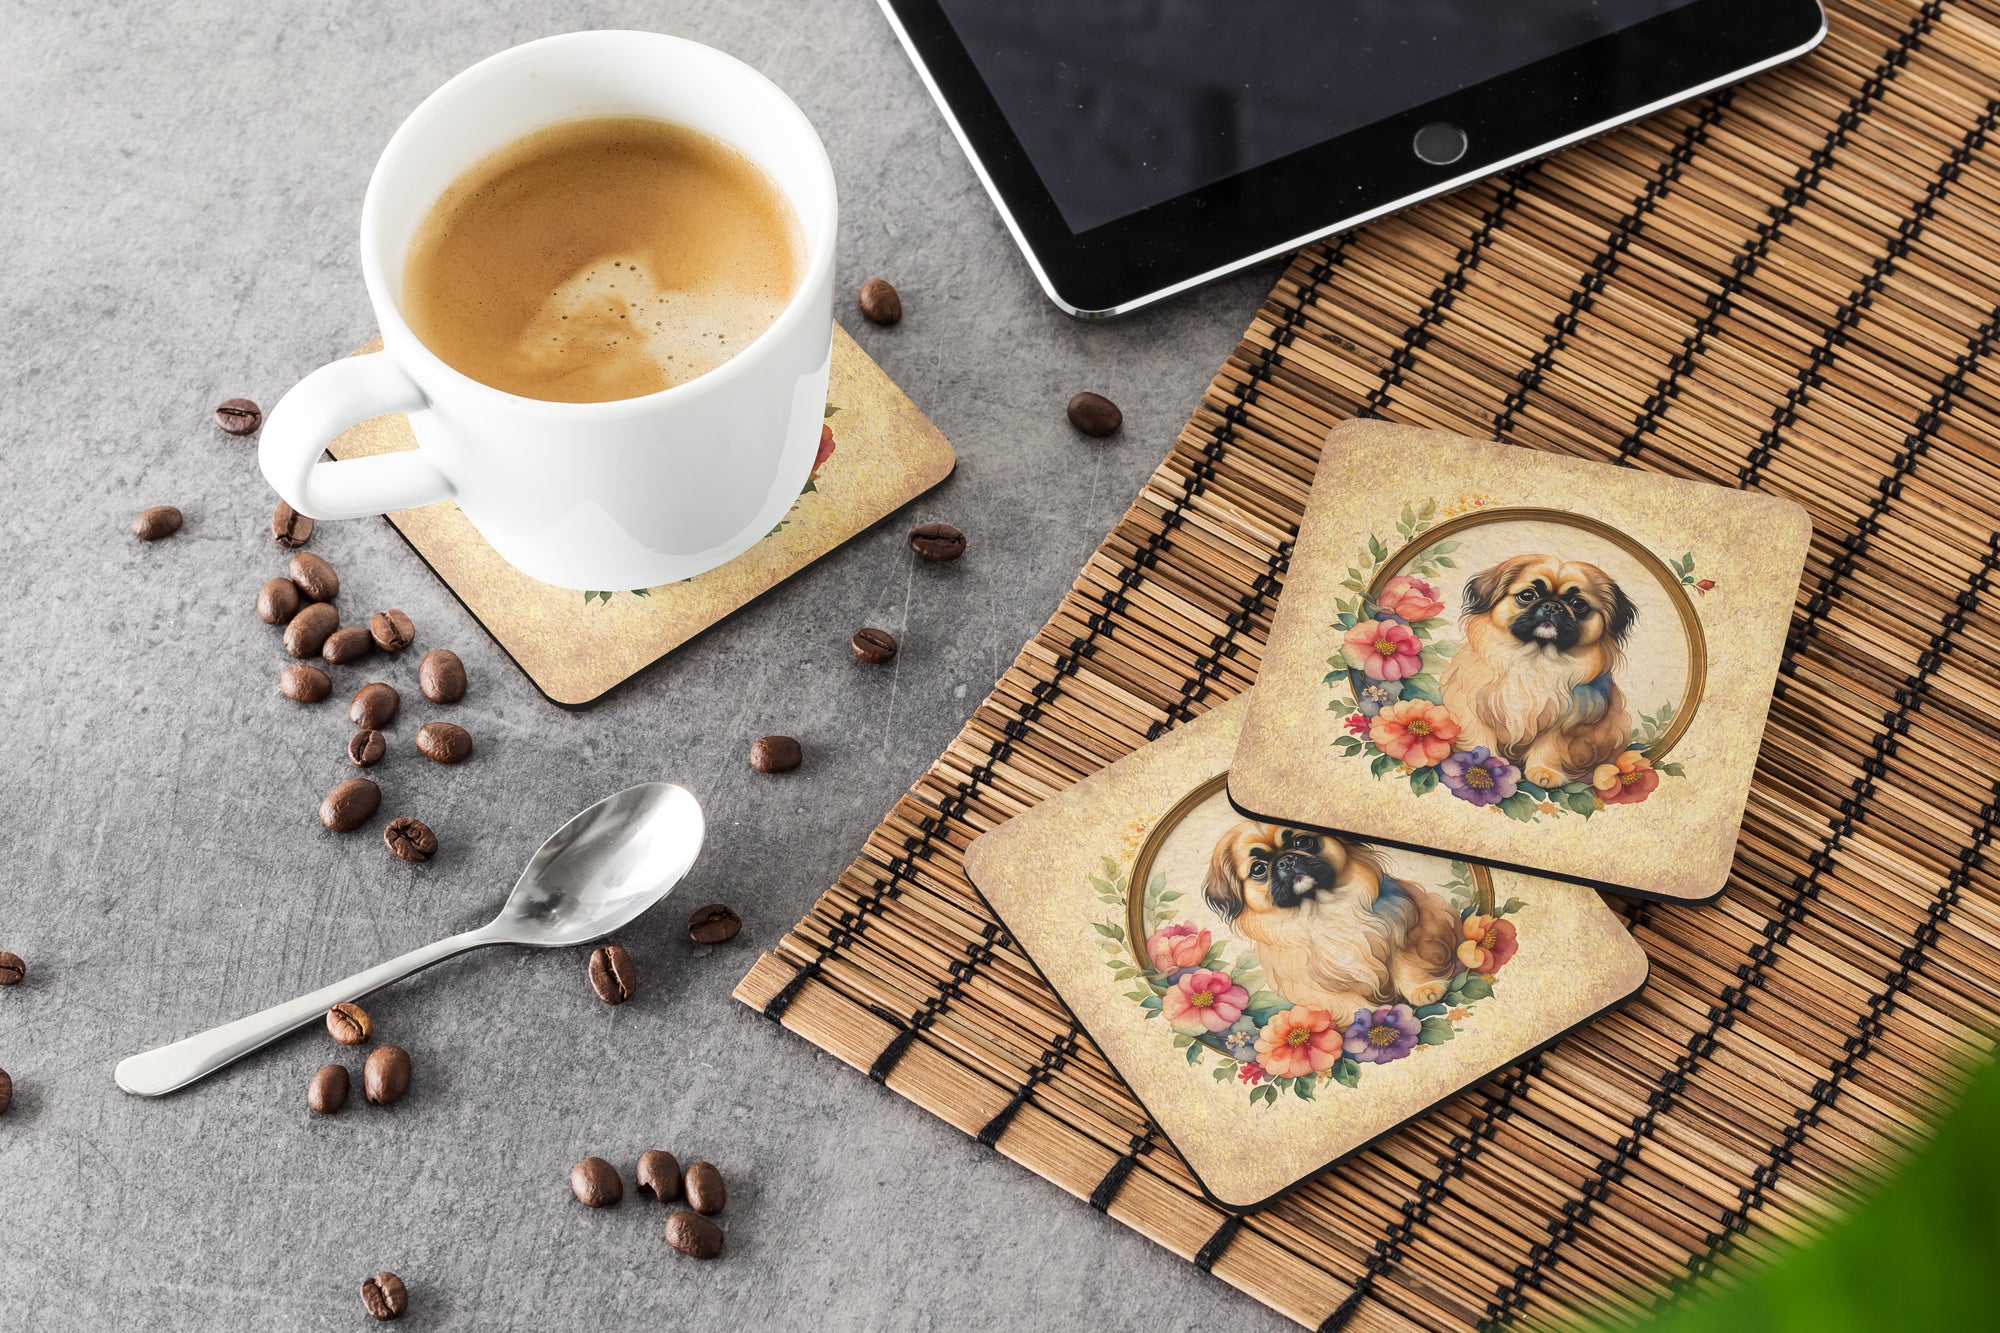 Pekingese and Flowers Foam Coasters